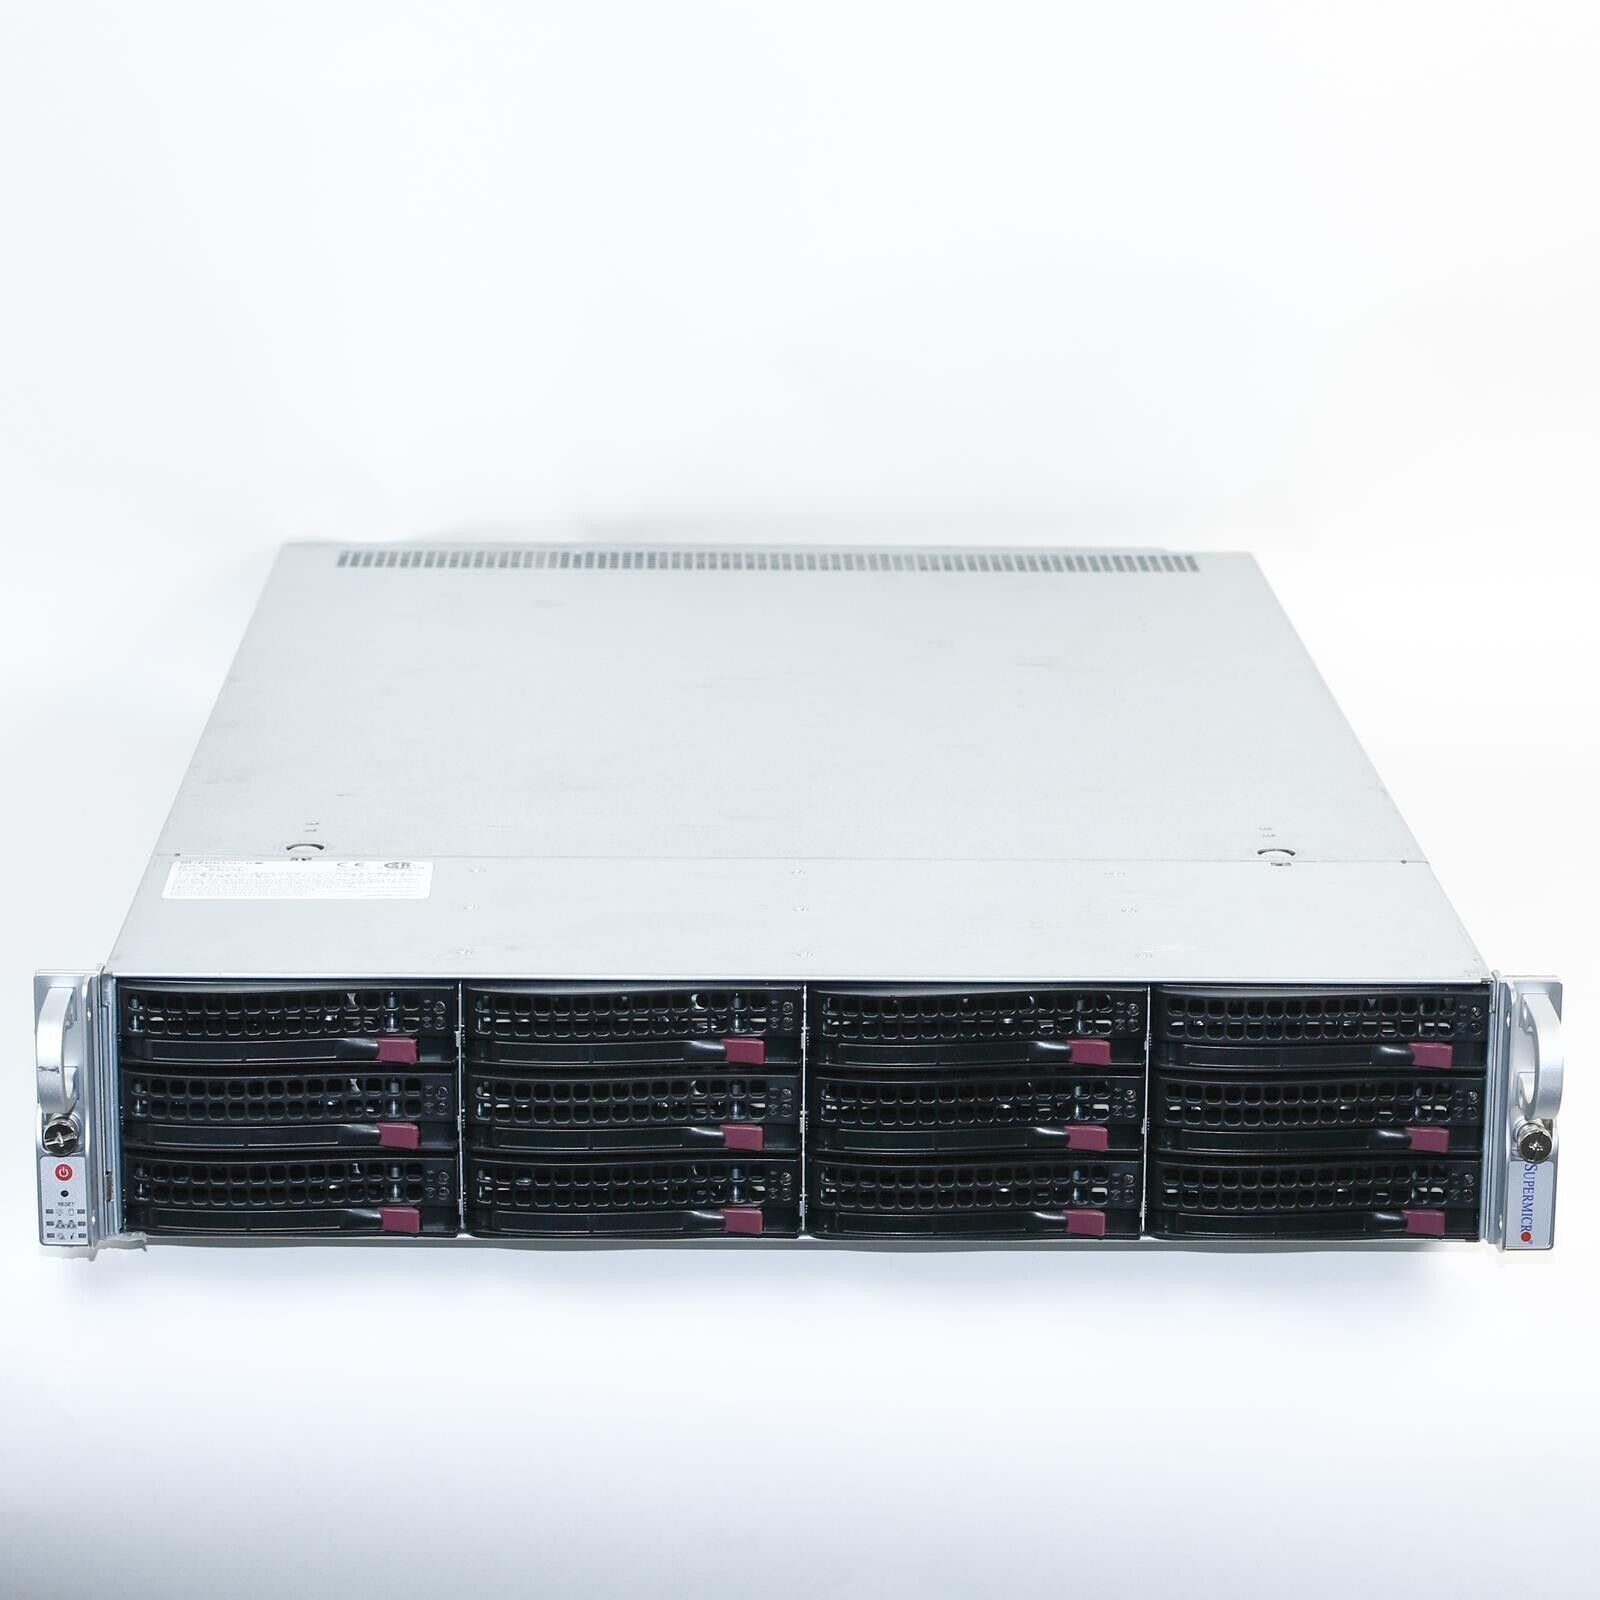 Supermicro 6028U X10DRU-i+ 2x LGA2011v3 Xeon E5-2600v3/v4 2U Server CTO